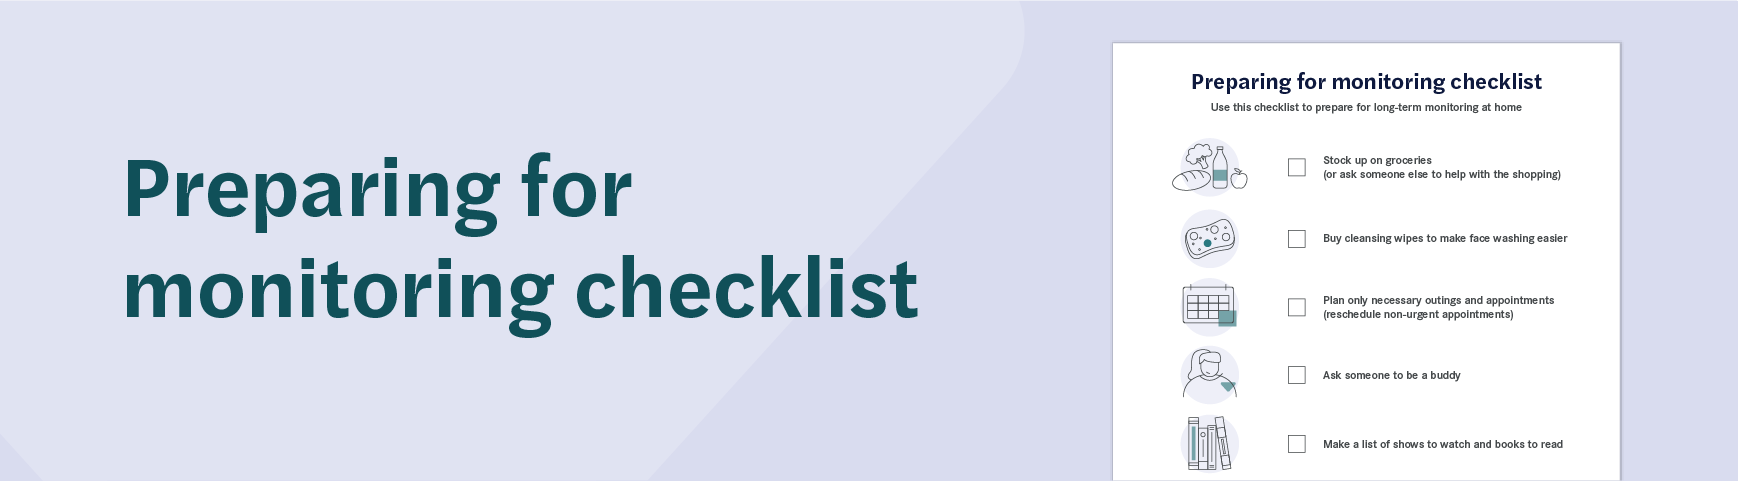 Download the Preparing for Monitoring Checklist